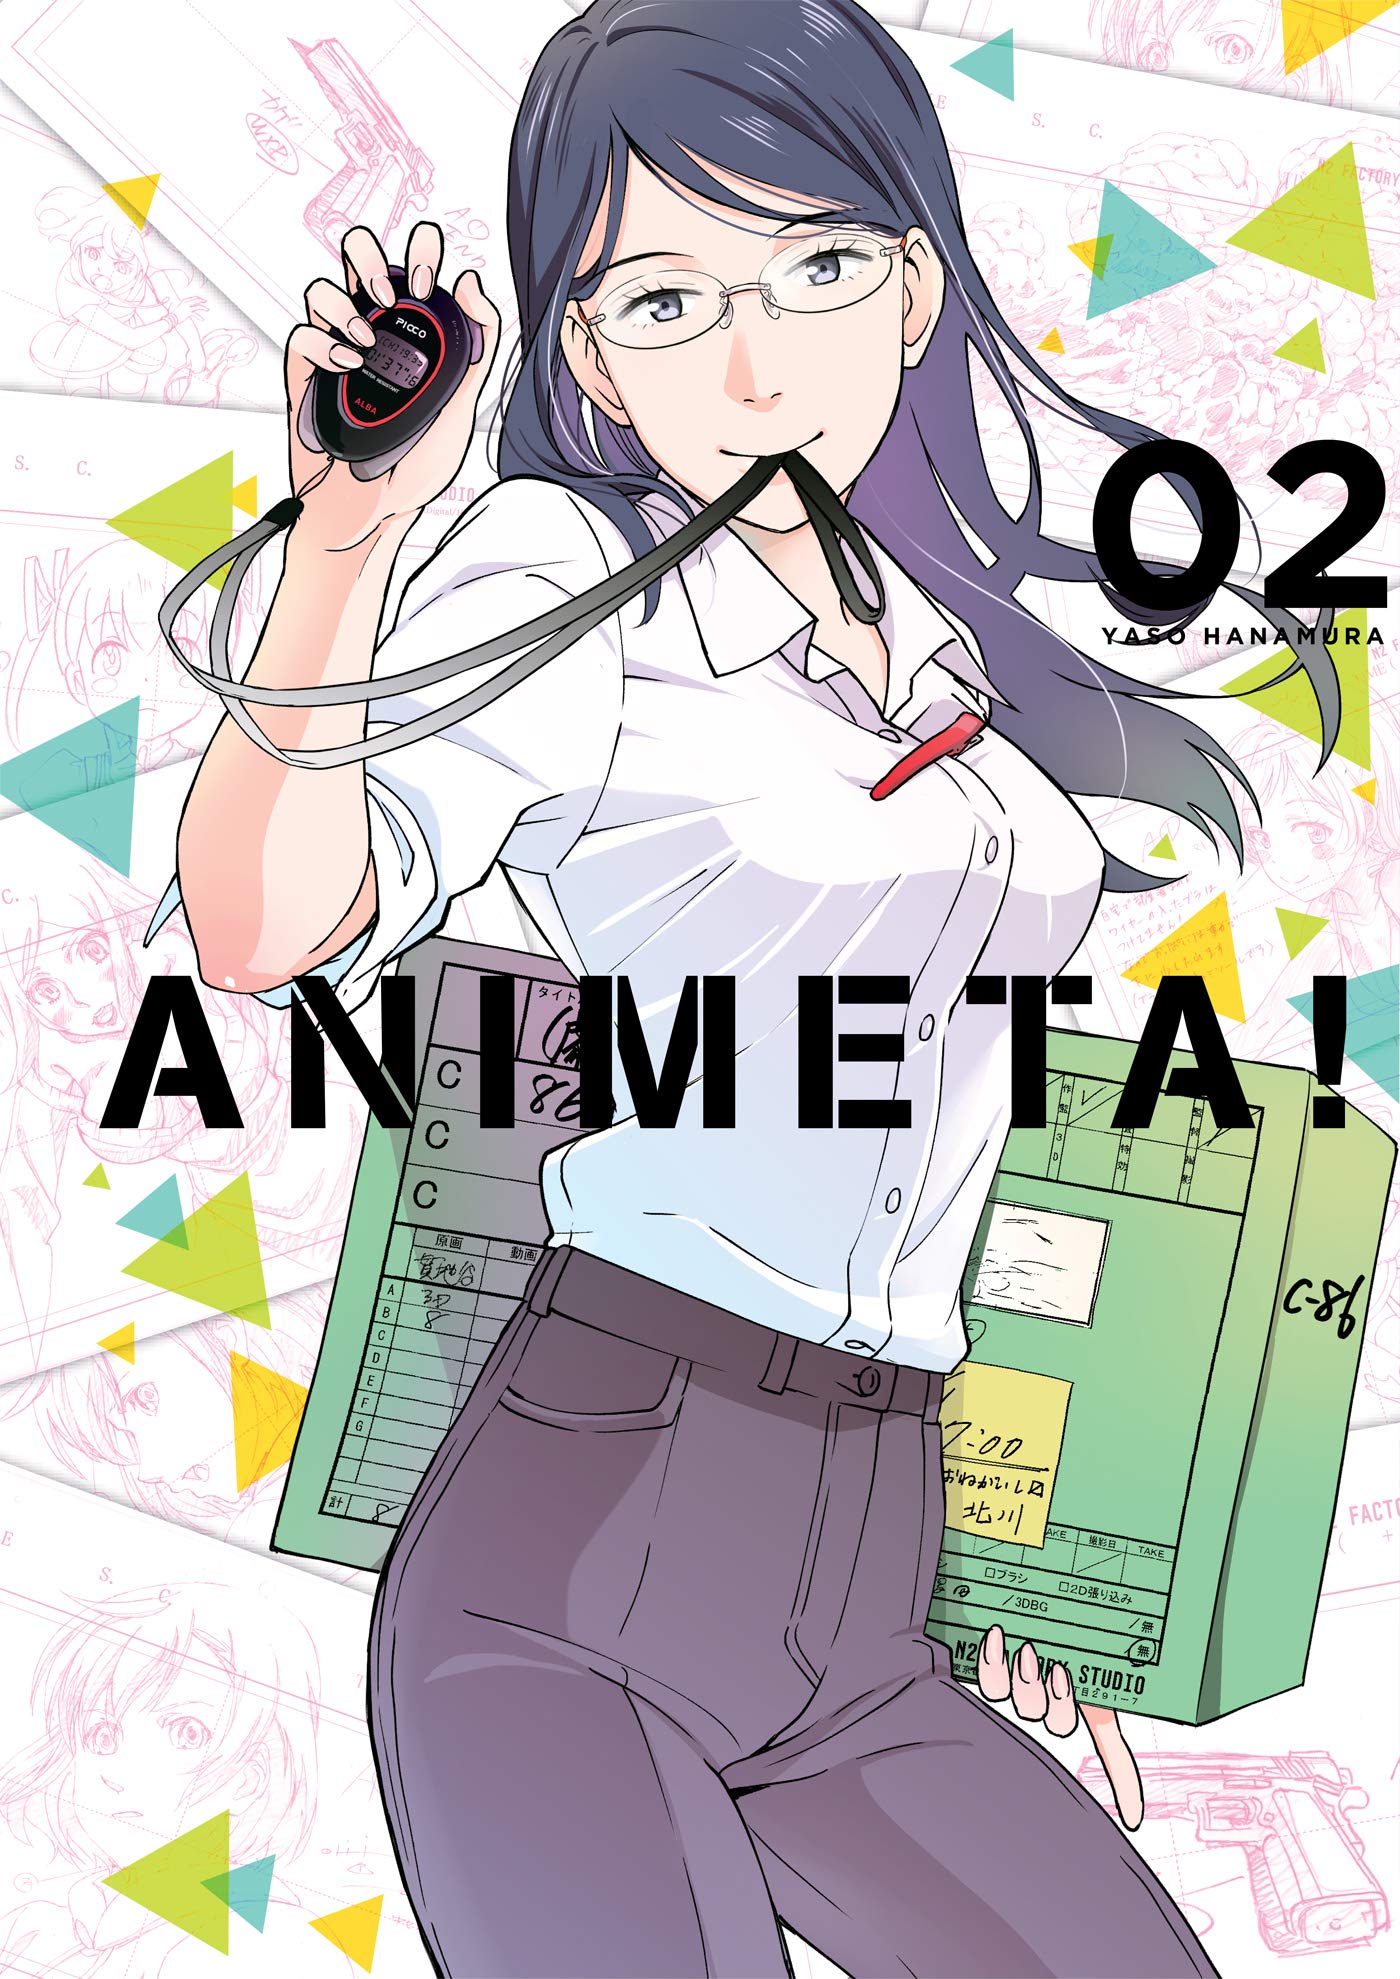 Animeta! - Volume 2 | Yaso Hanamura